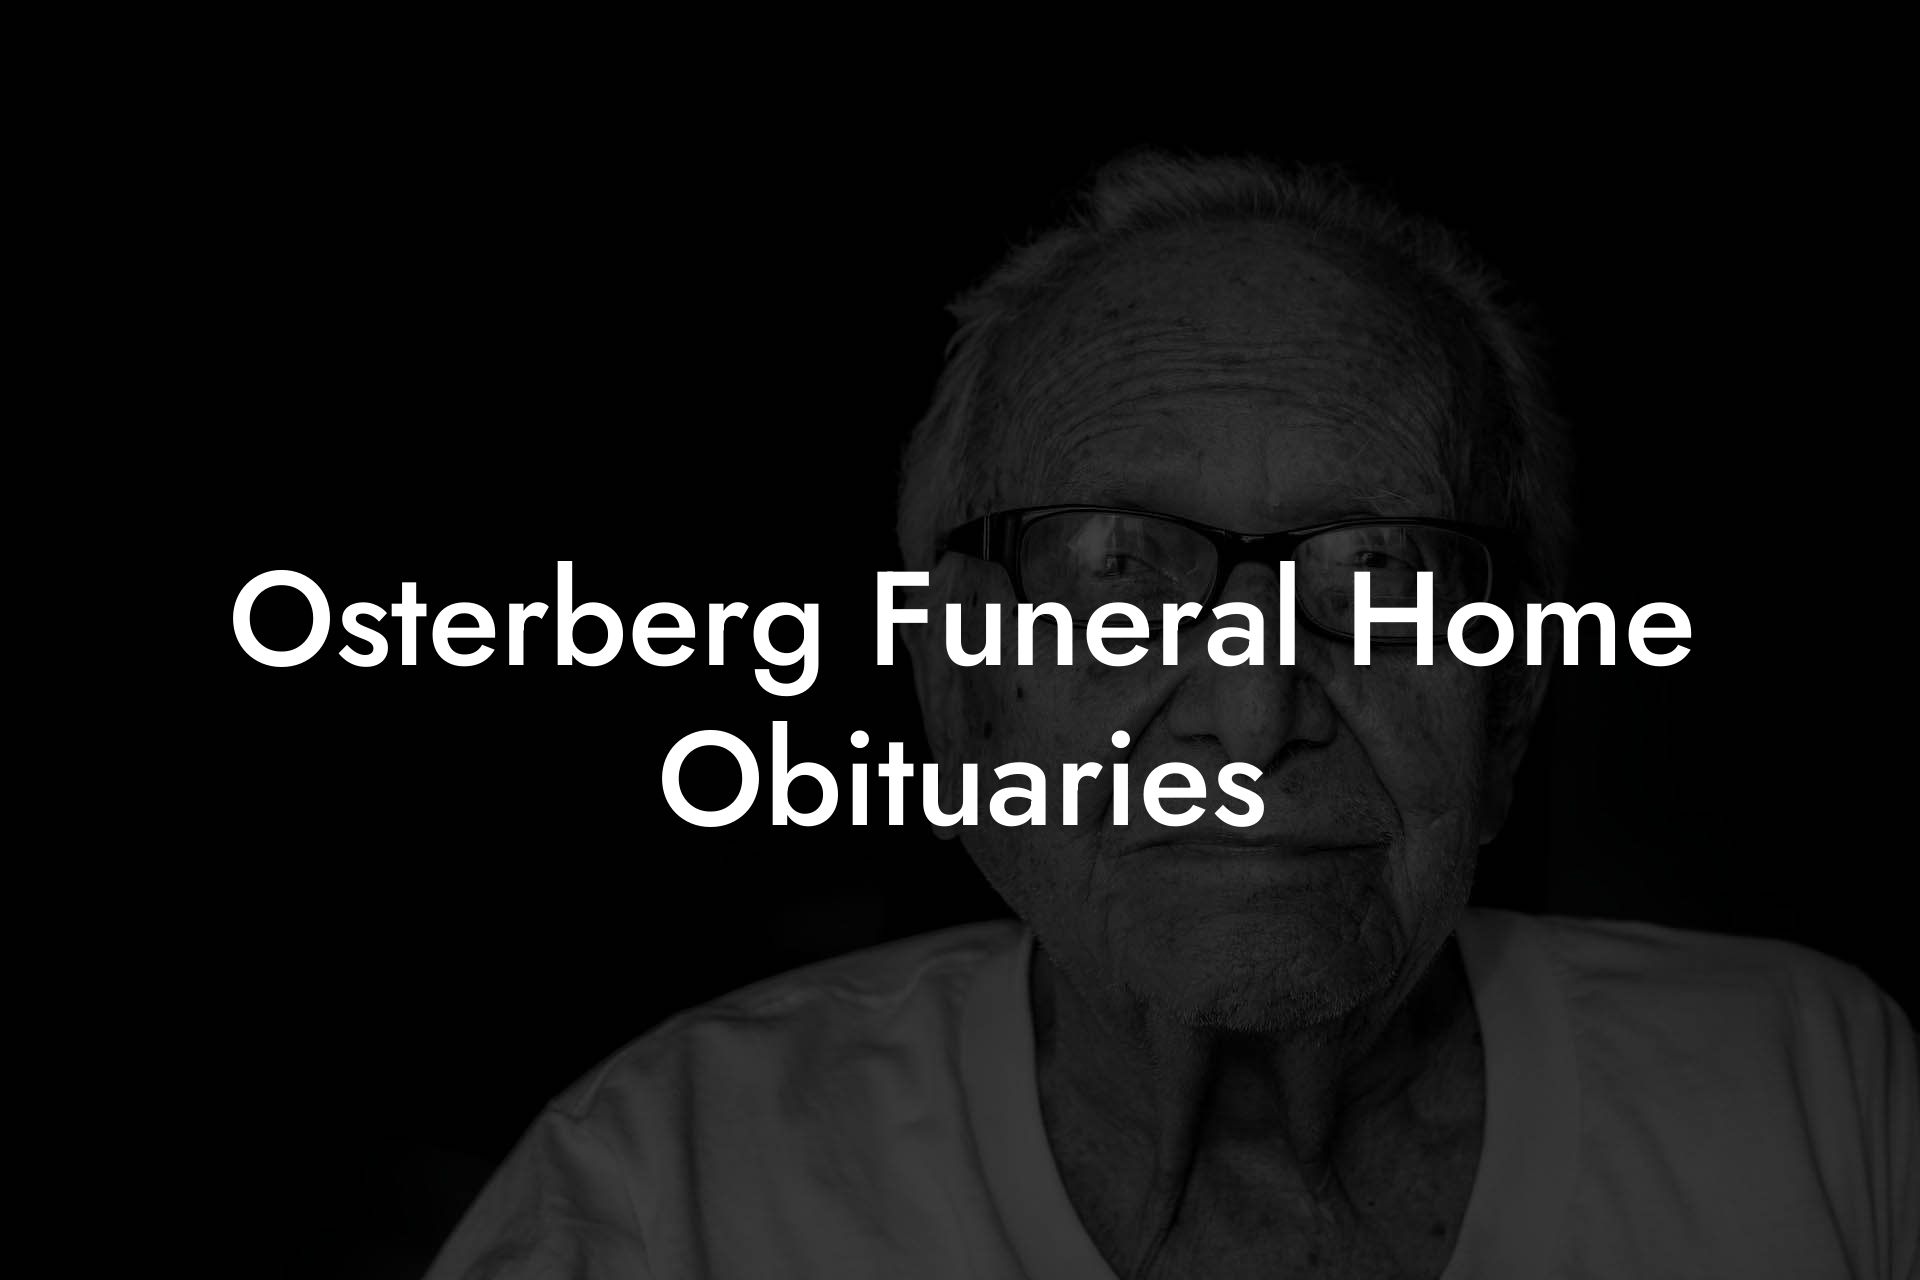 Osterberg Funeral Home Obituaries